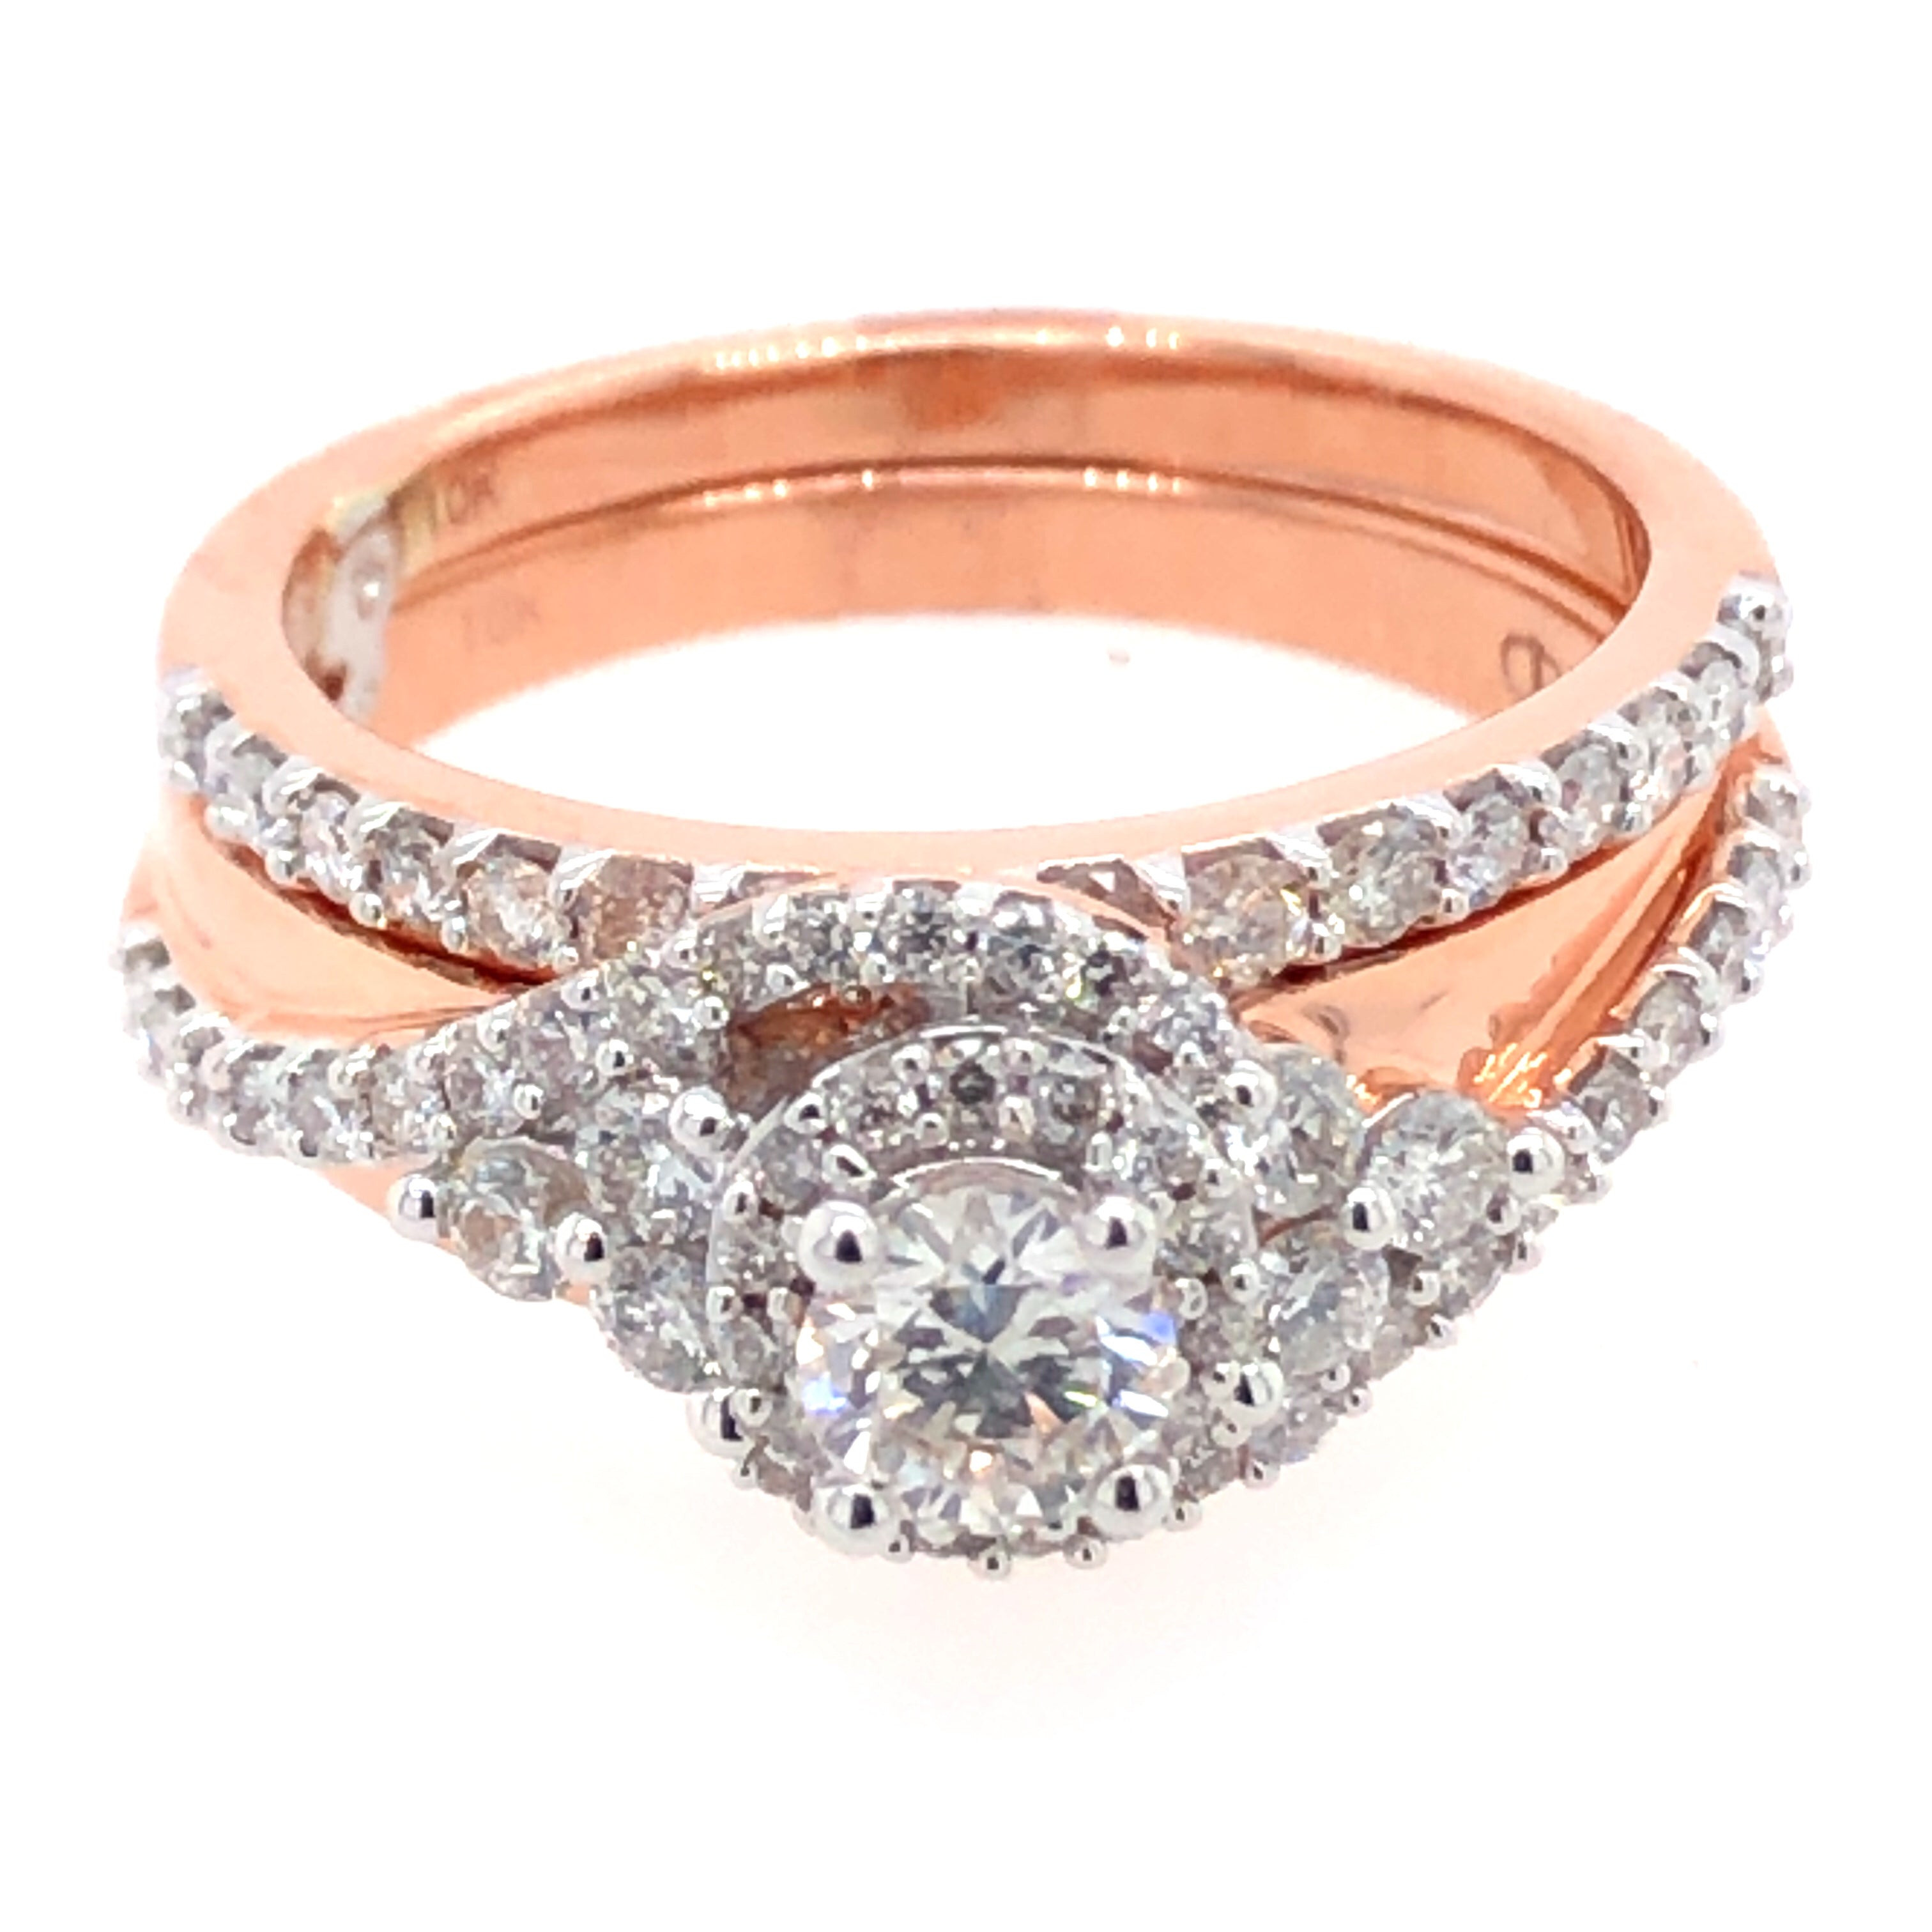 Halo Inspired Engagement Ring - Diamond Engagement Ring Set